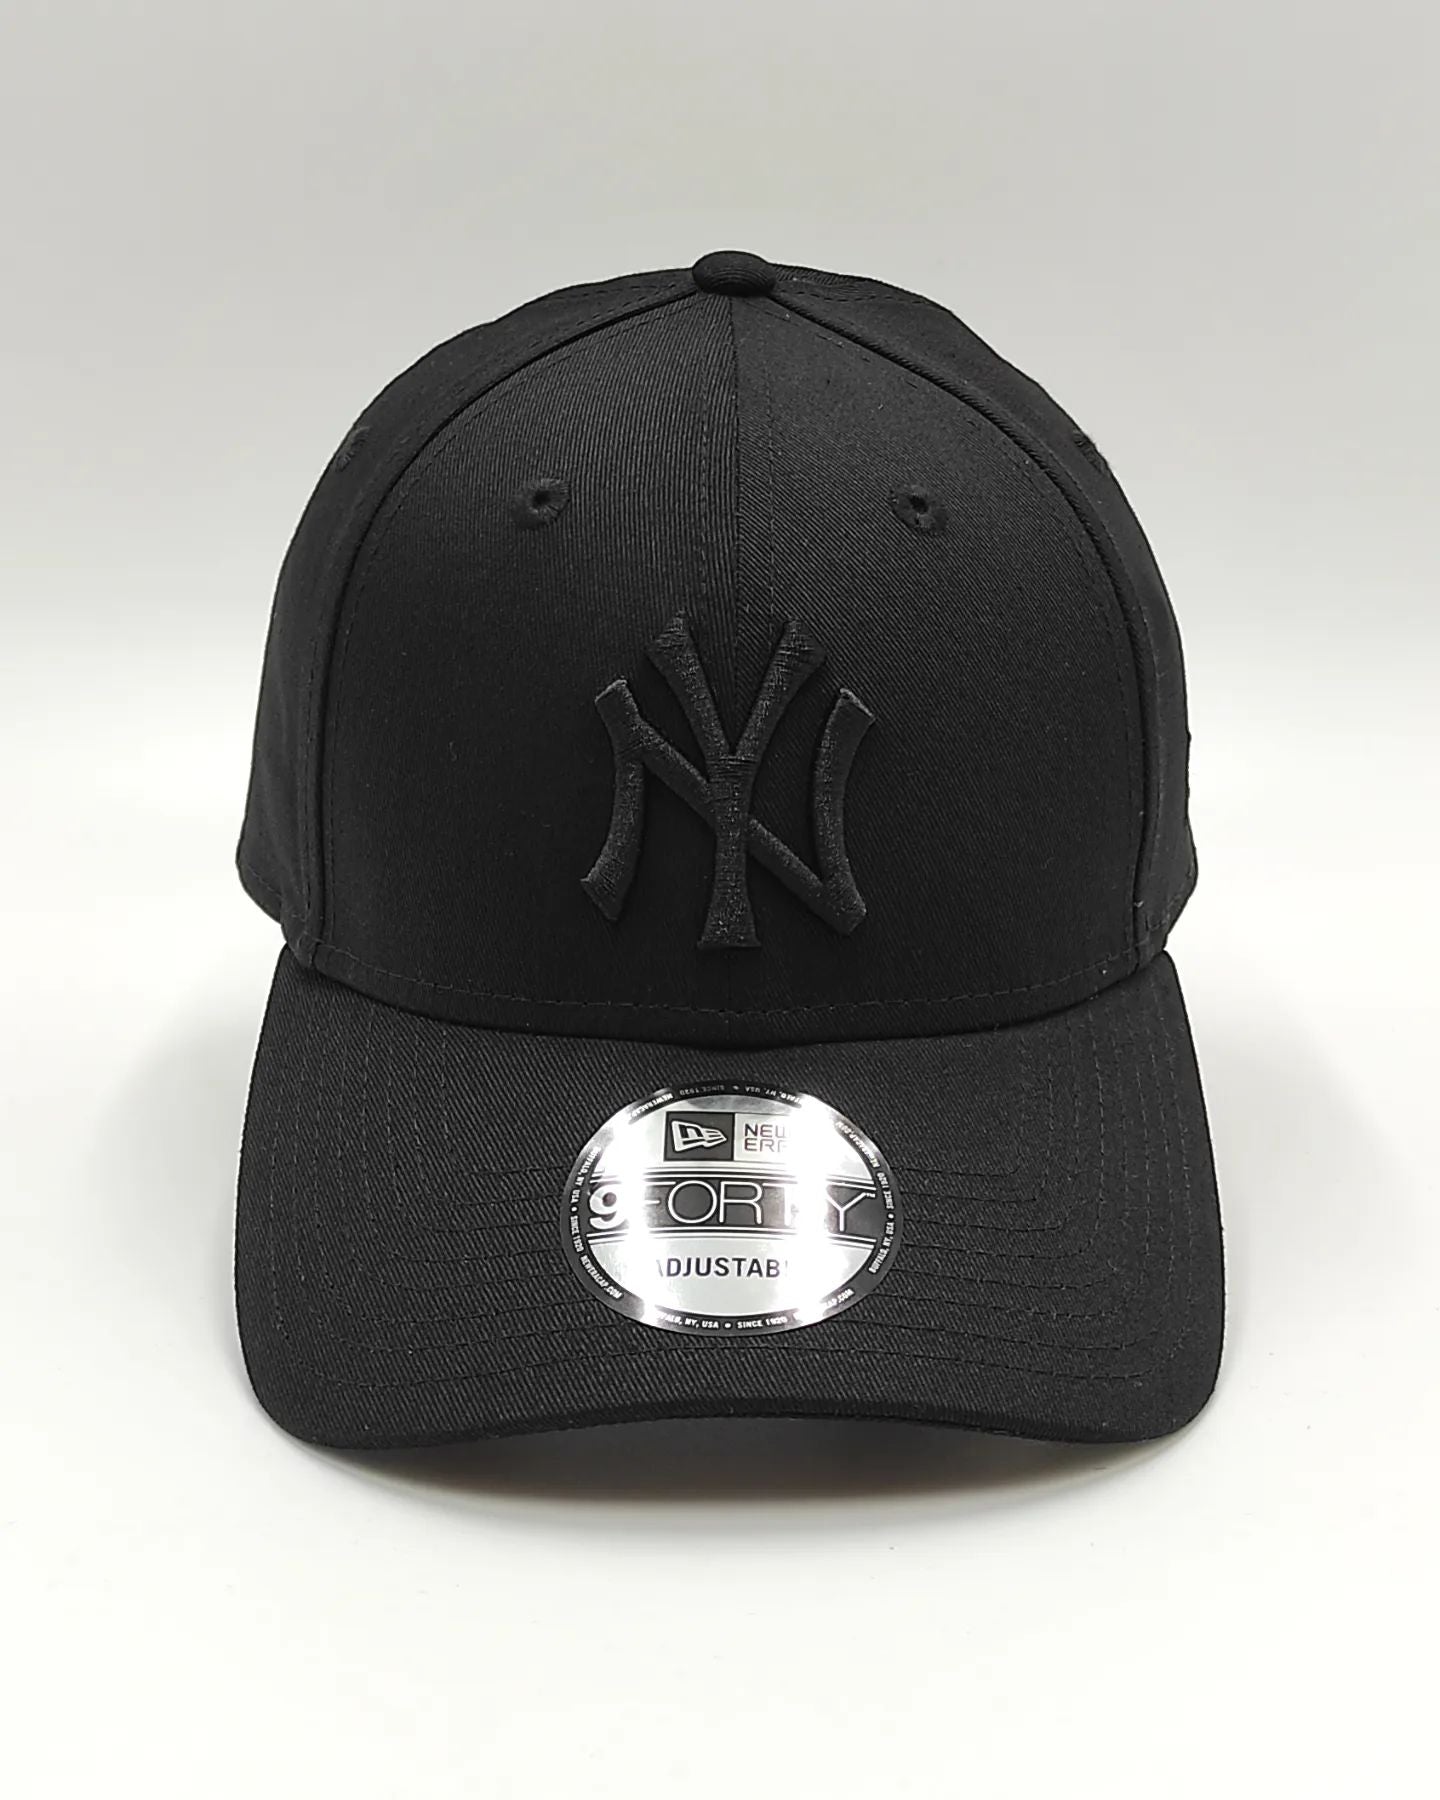 New Era New York Yankees Black & black 9forty